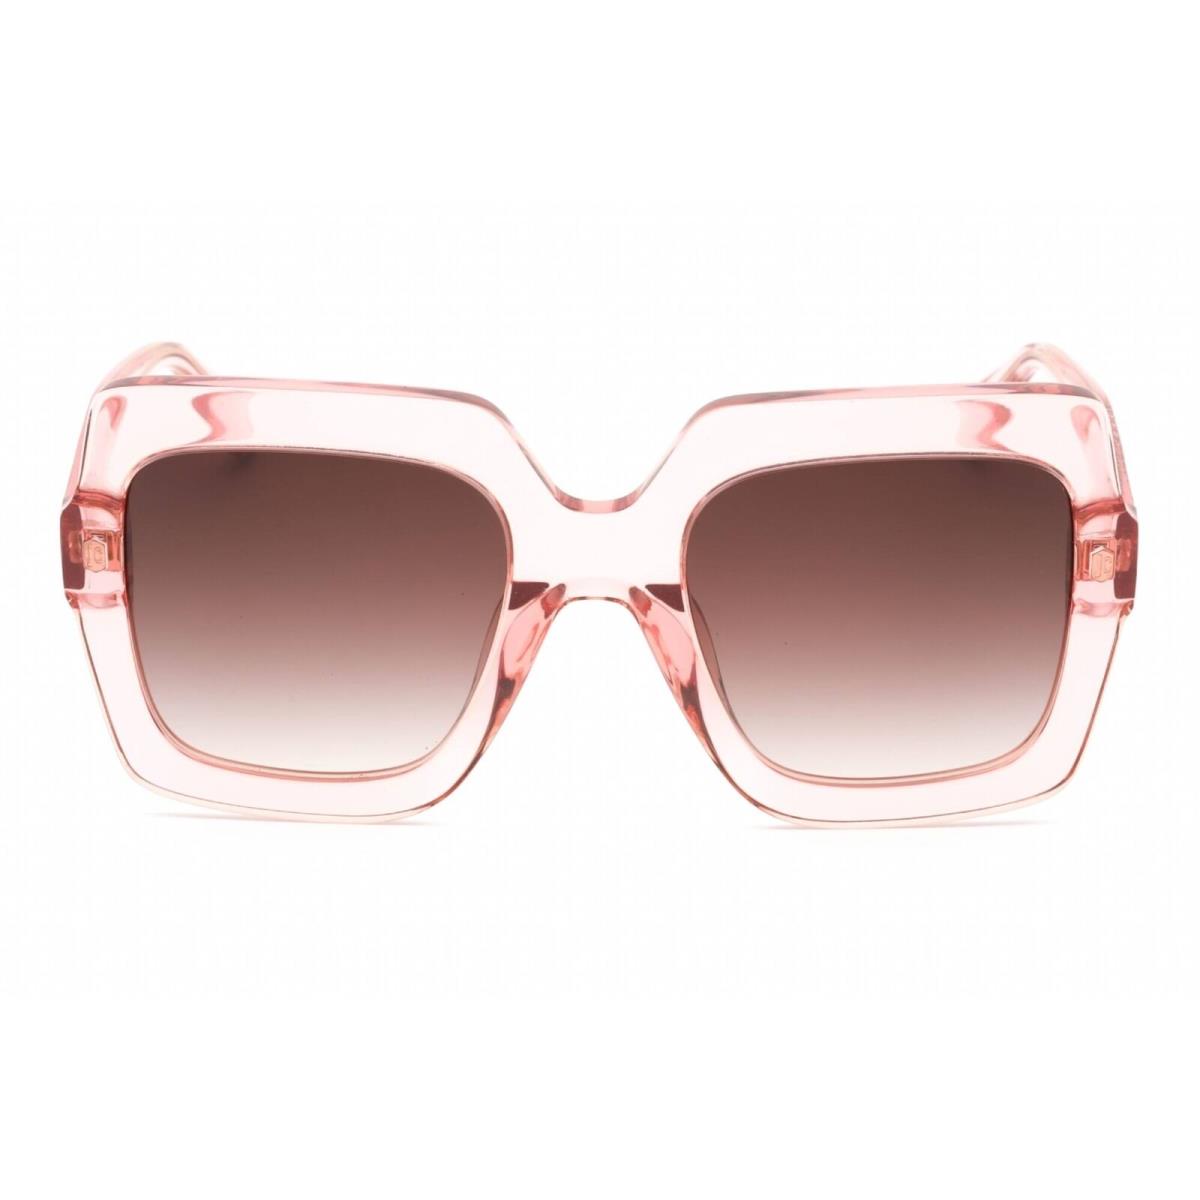 Just Cavalli Women`s Sunglasses Shiny Transparent Peach Square Frame SJC023 06M5